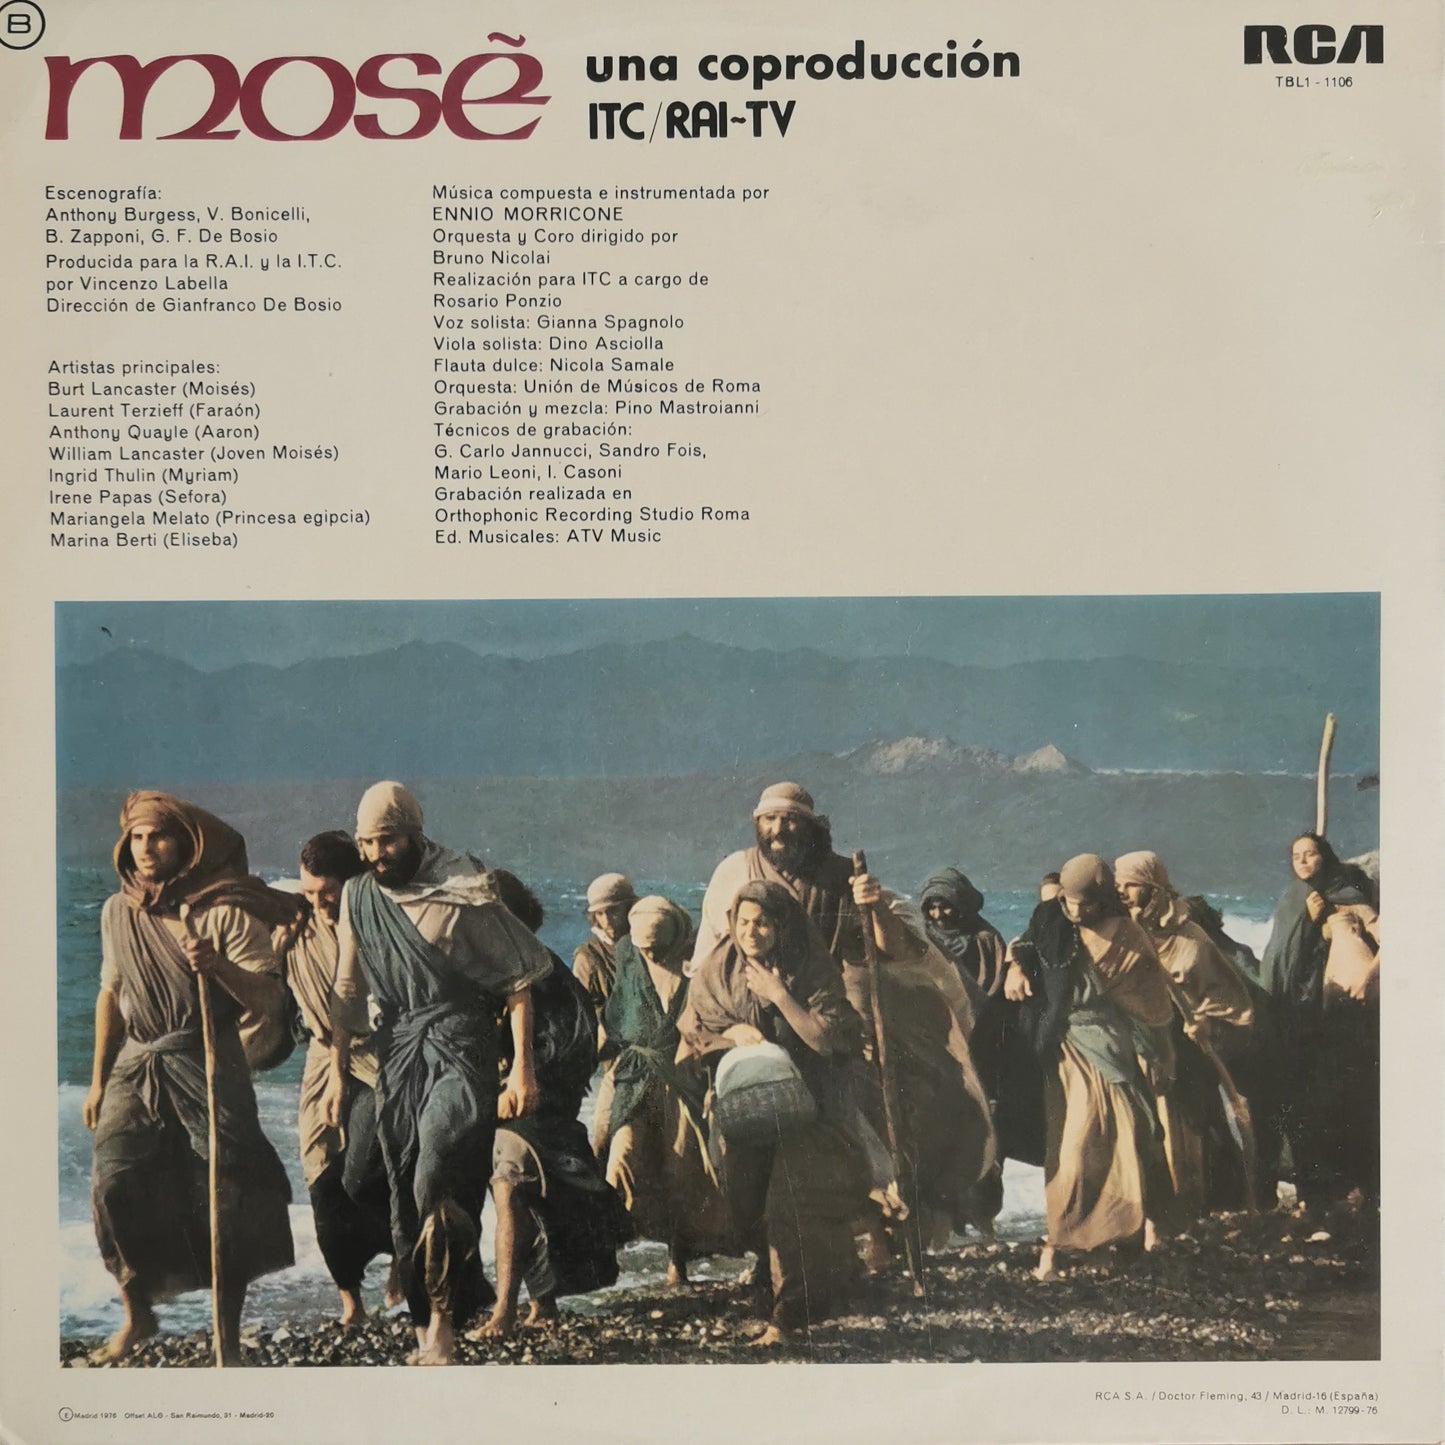 ENNIO MORRICONE - Moses (Banda Sonora Original)